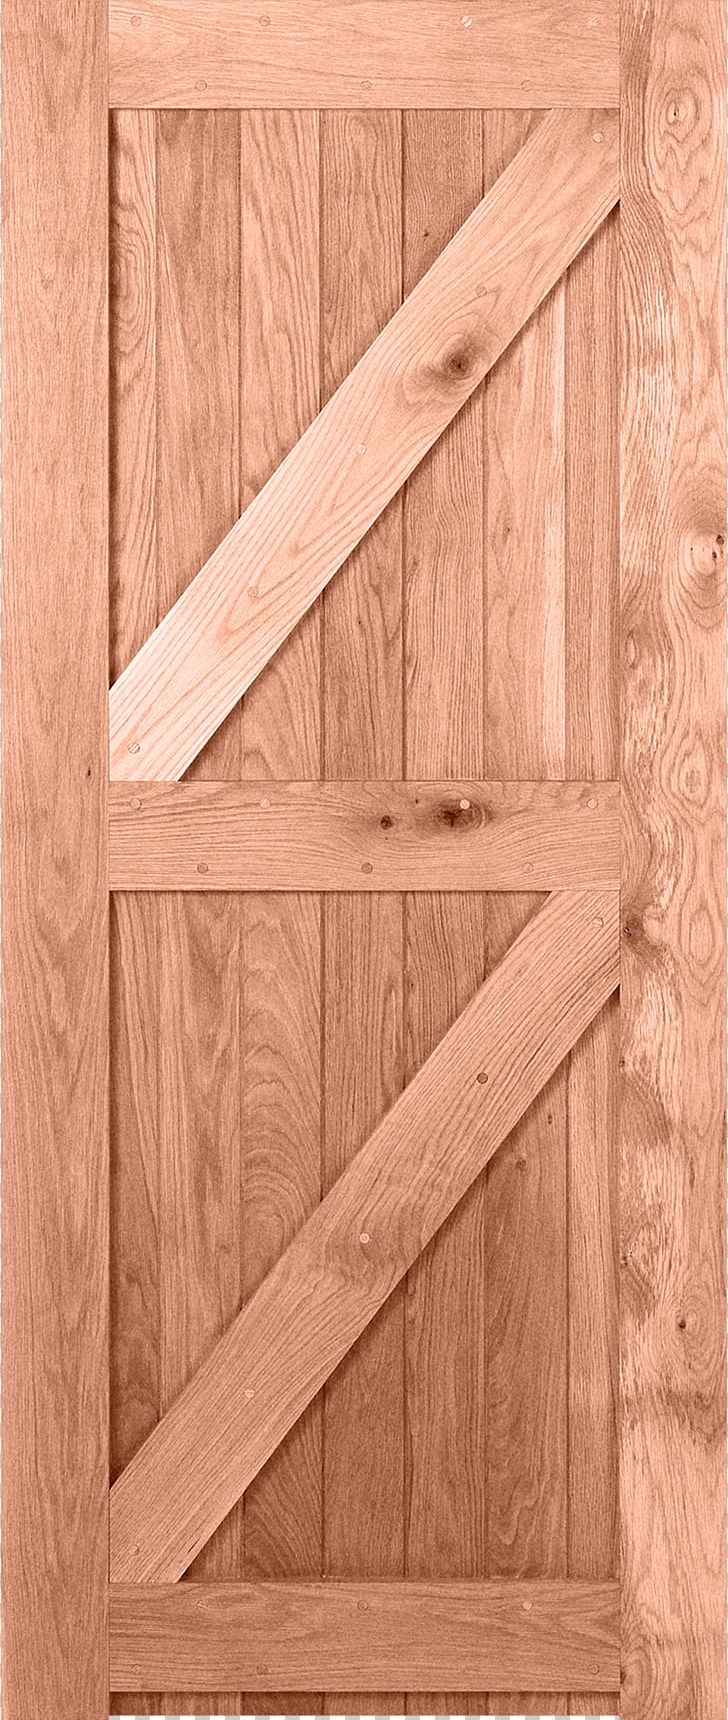 Door Wood Plank Rustic Furniture Interior Design Services